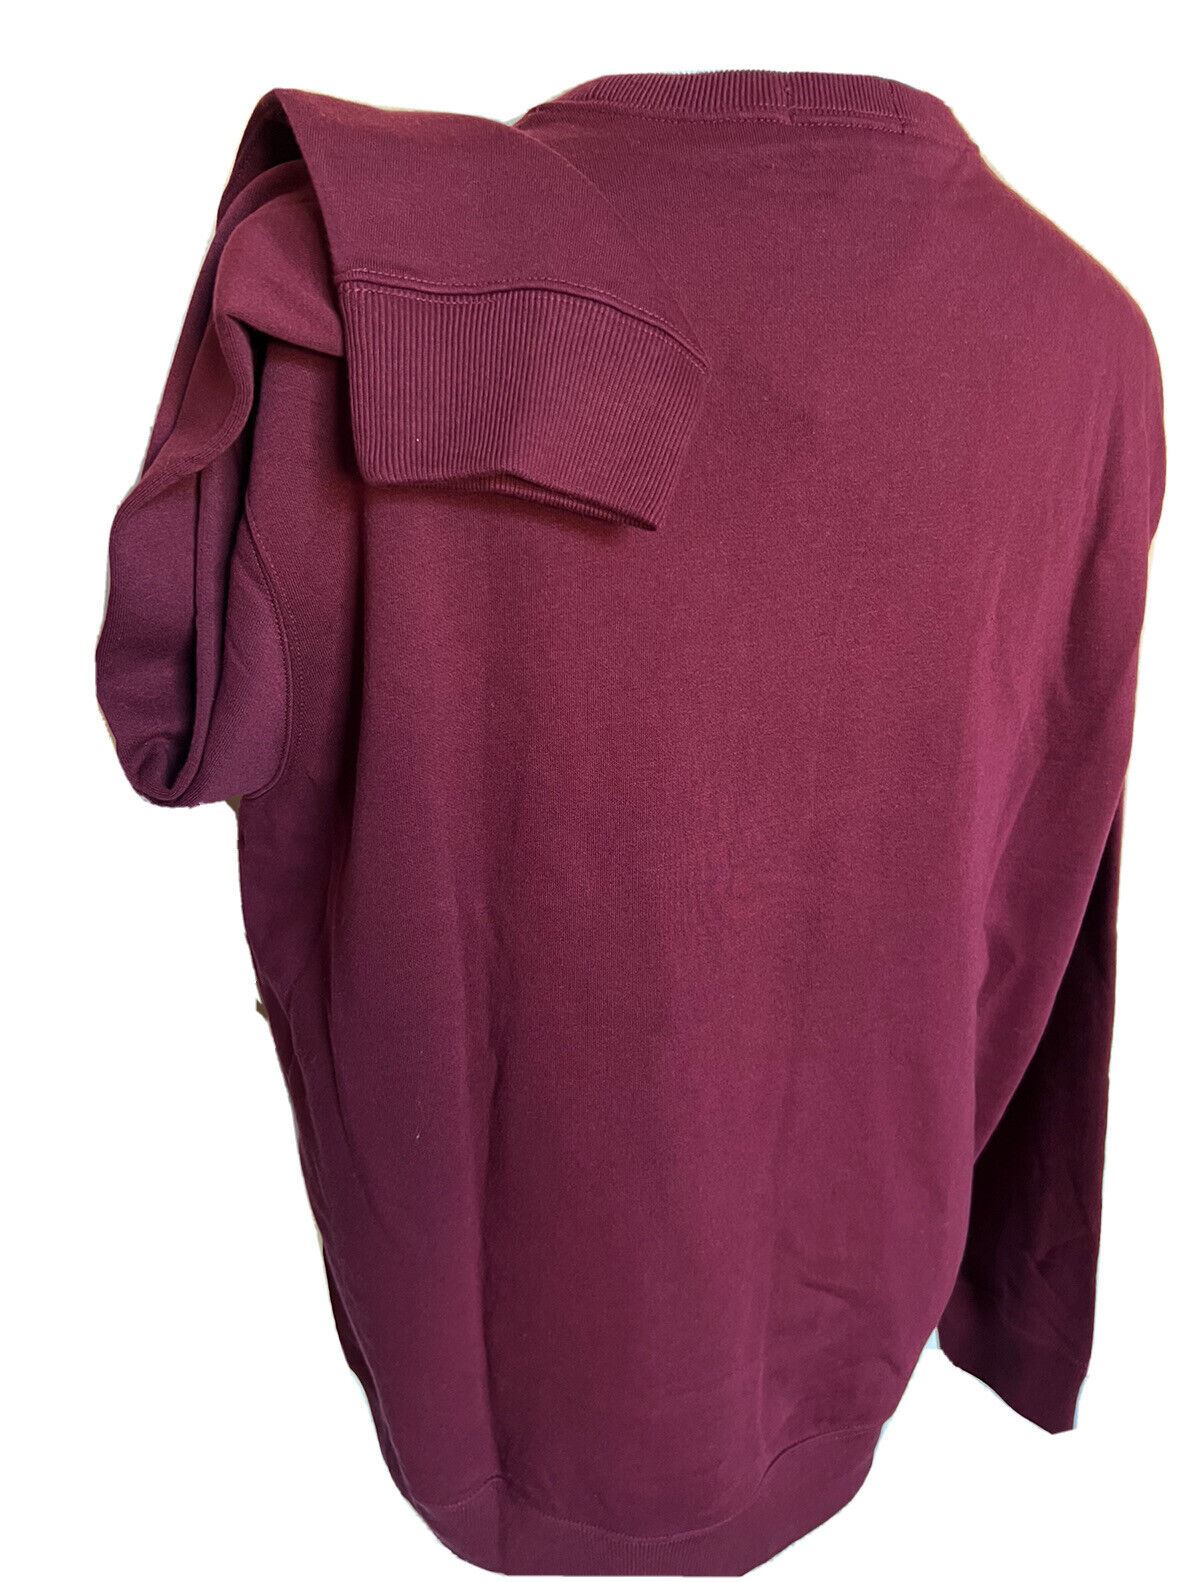 Новый свитшот Polo Ralph Lauren Wine Bear бордового цвета 3XB за 168 долларов 